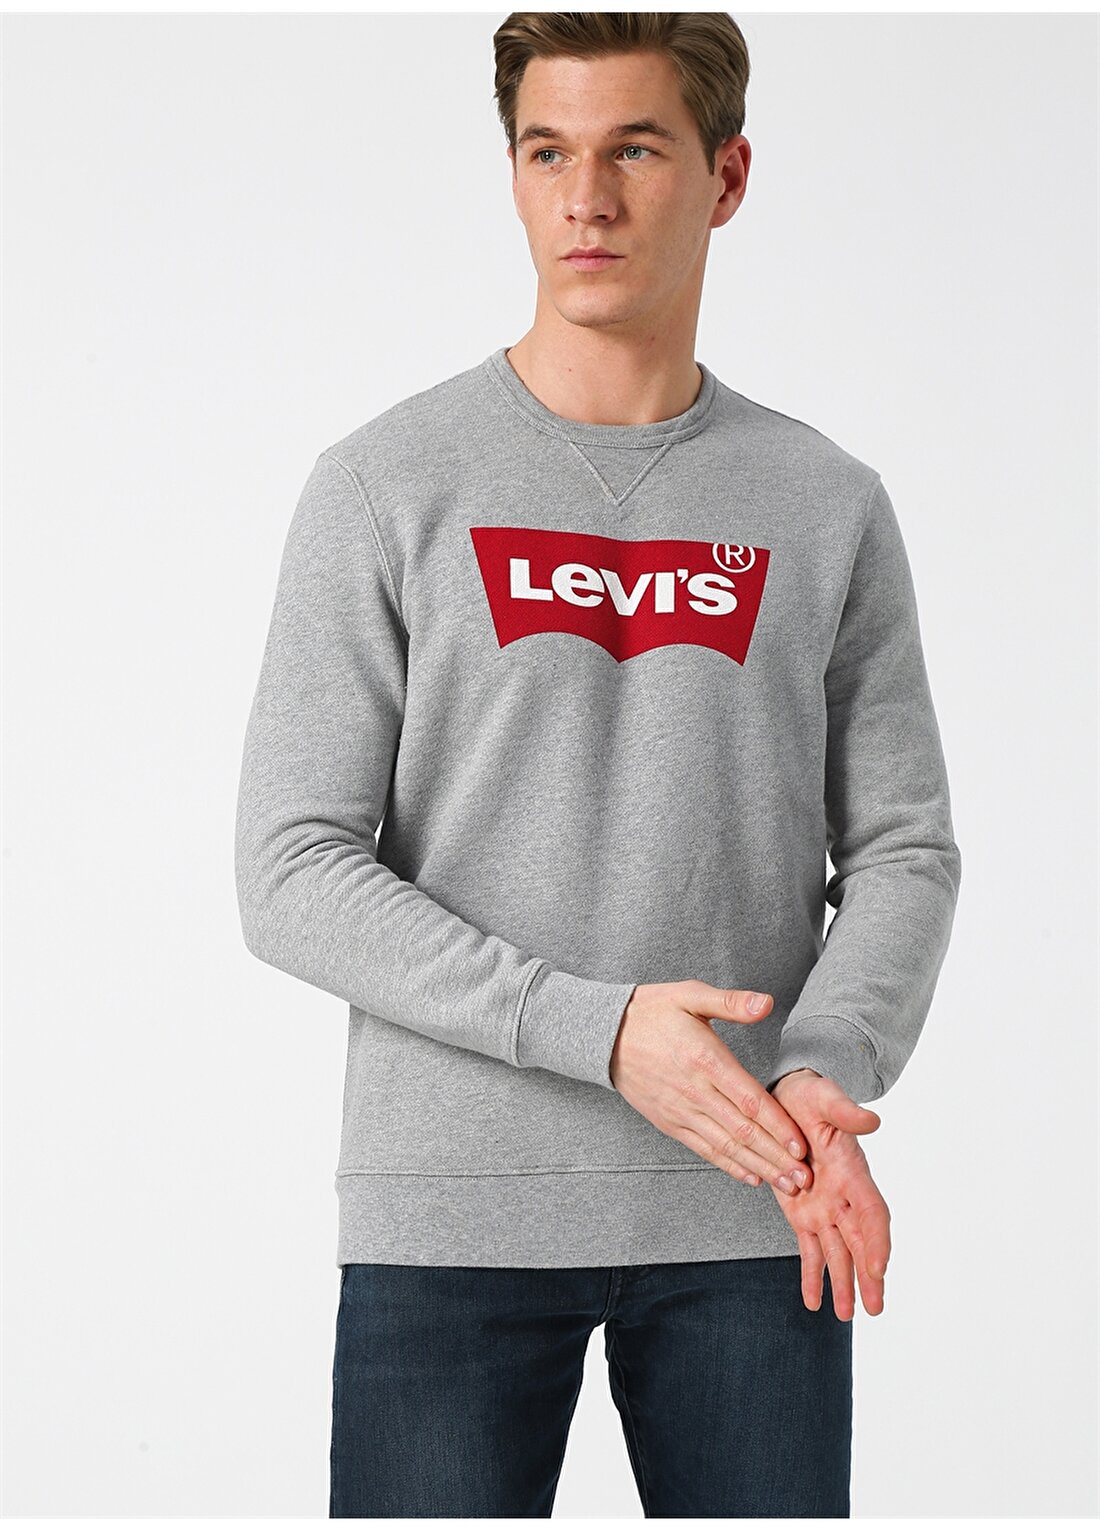 Levis 17895-0079 Graphic Crew B Add Crew Sweatshirt